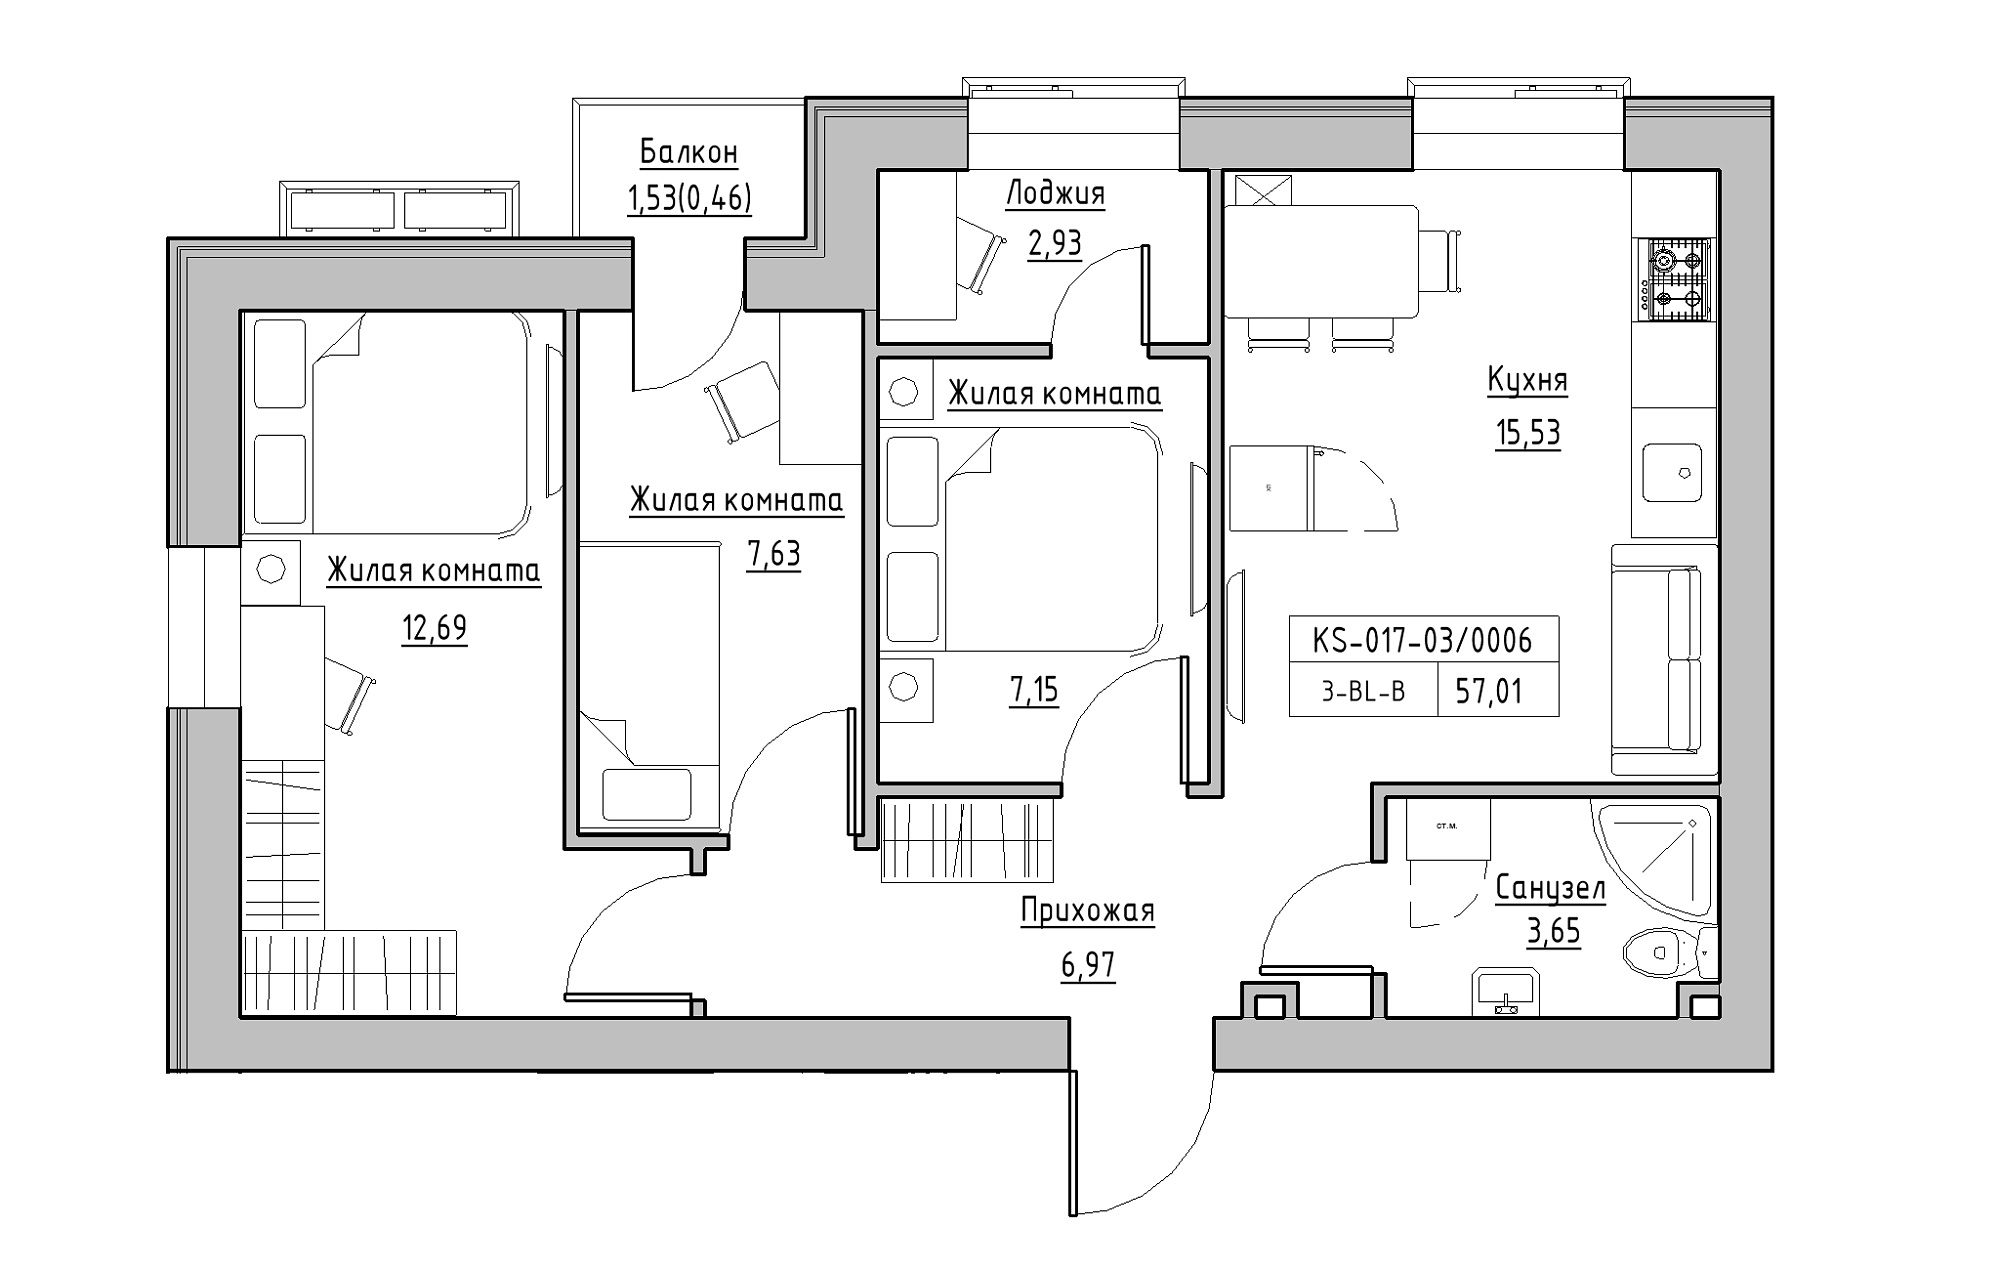 Planning 3-rm flats area 57.01m2, KS-017-03/0006.